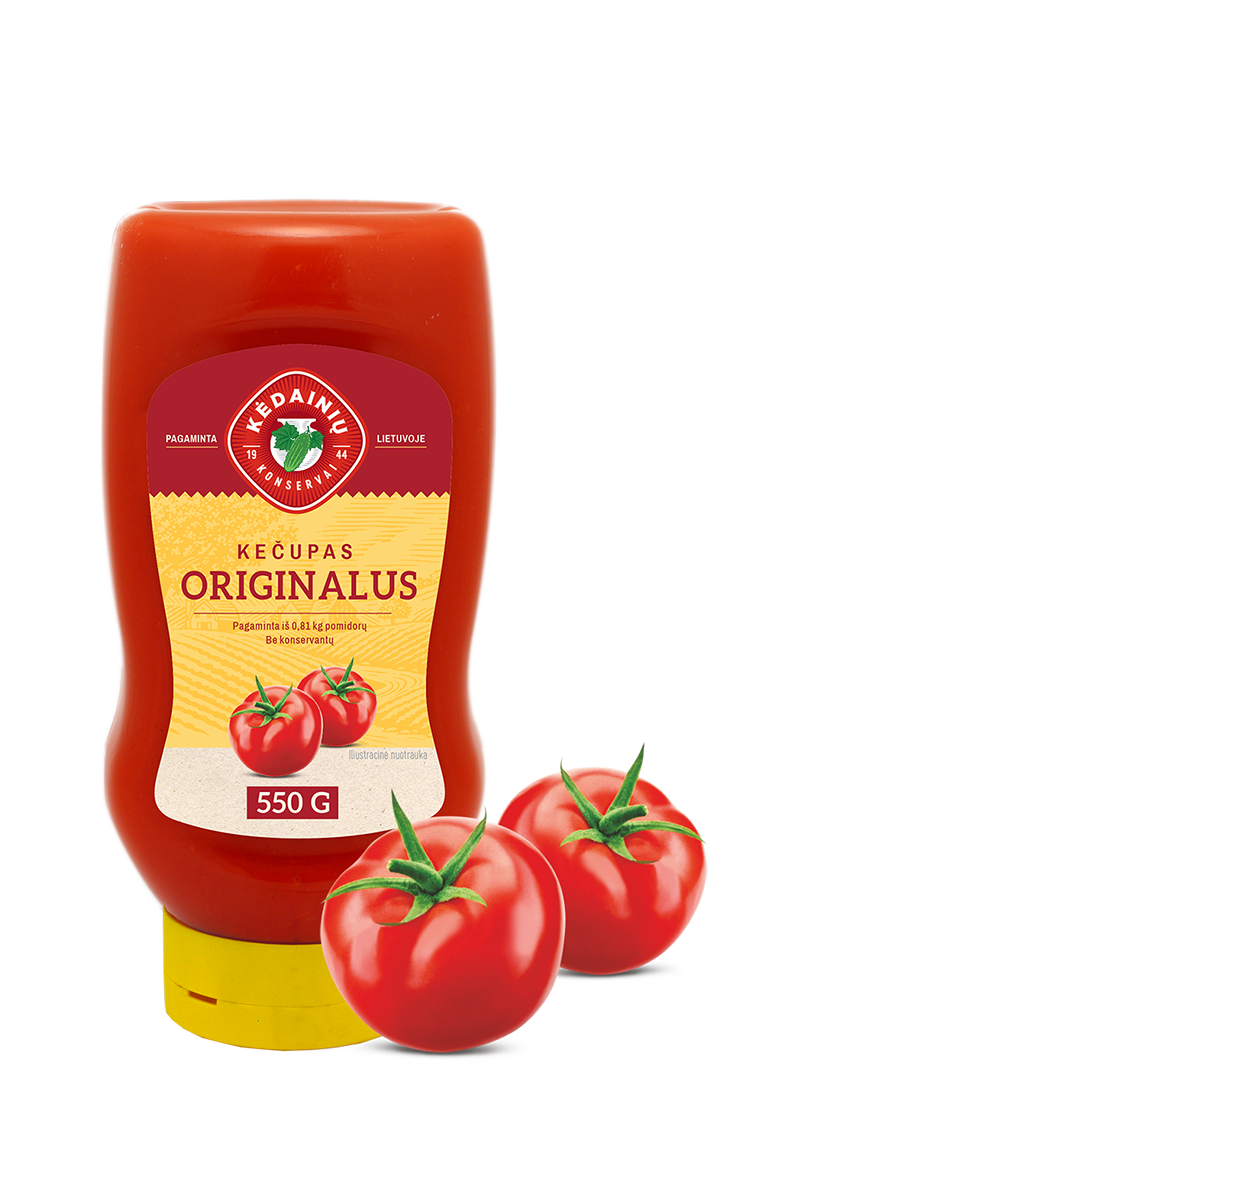 Ketchup Original